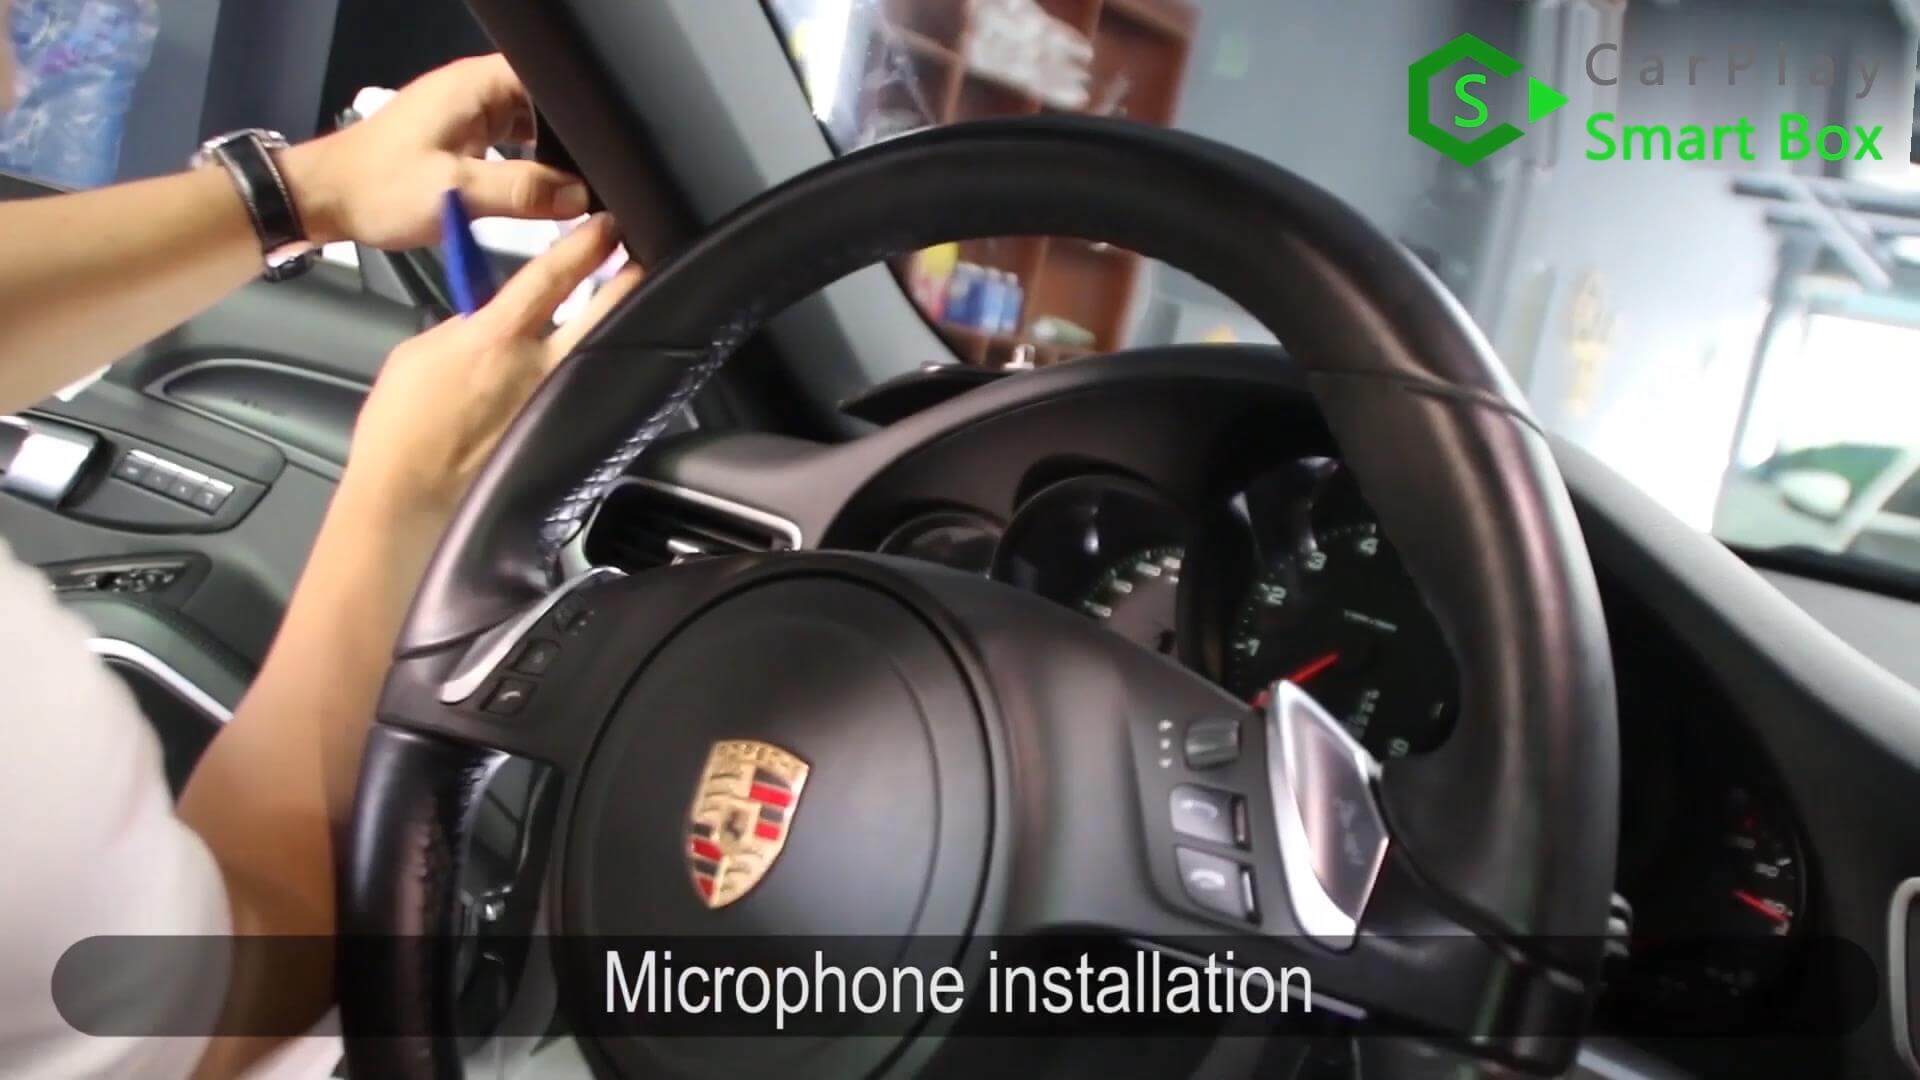 15. Microphone installation - Wireless Apple CarPlay Smart Box for Porsche 911 PCM3.1 Head unit - CarPlay Smart Box